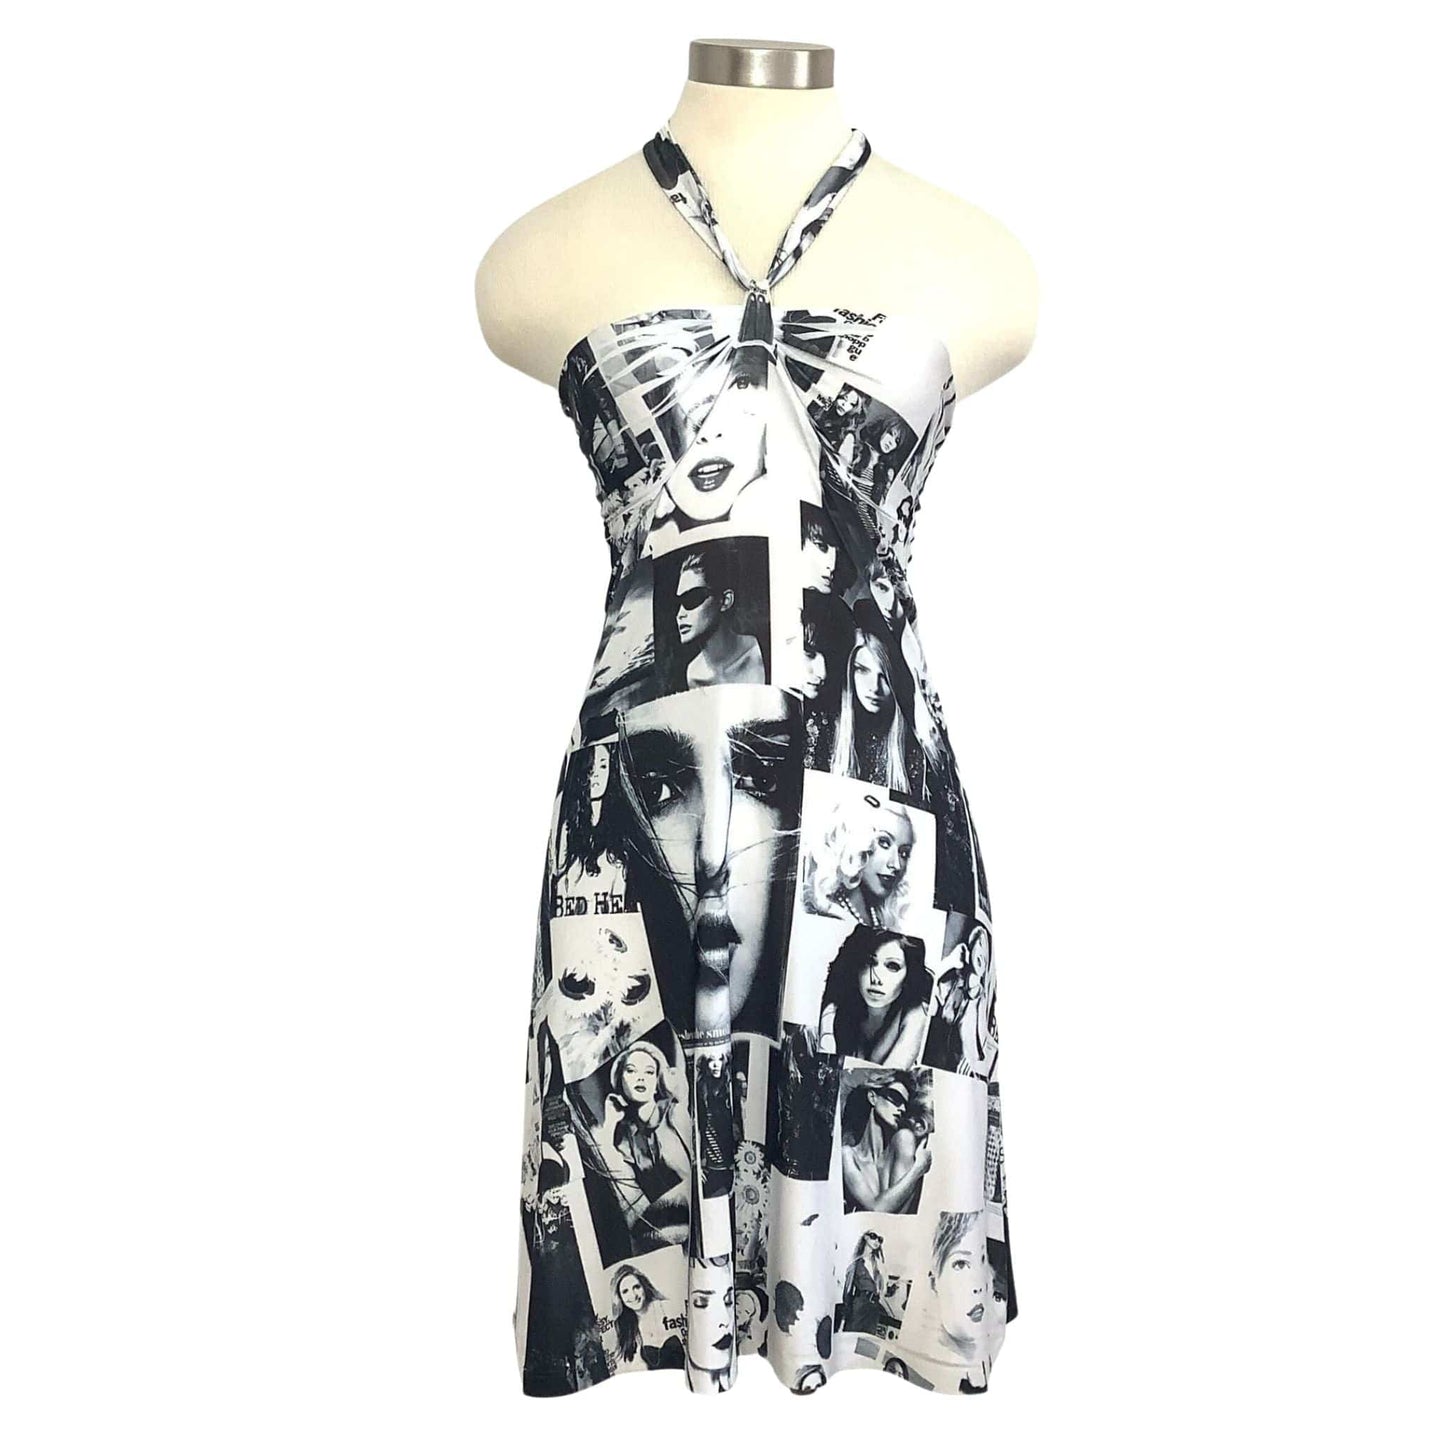 Supermodel Bodycon Dress Medium / B&W / Vintage 1990s